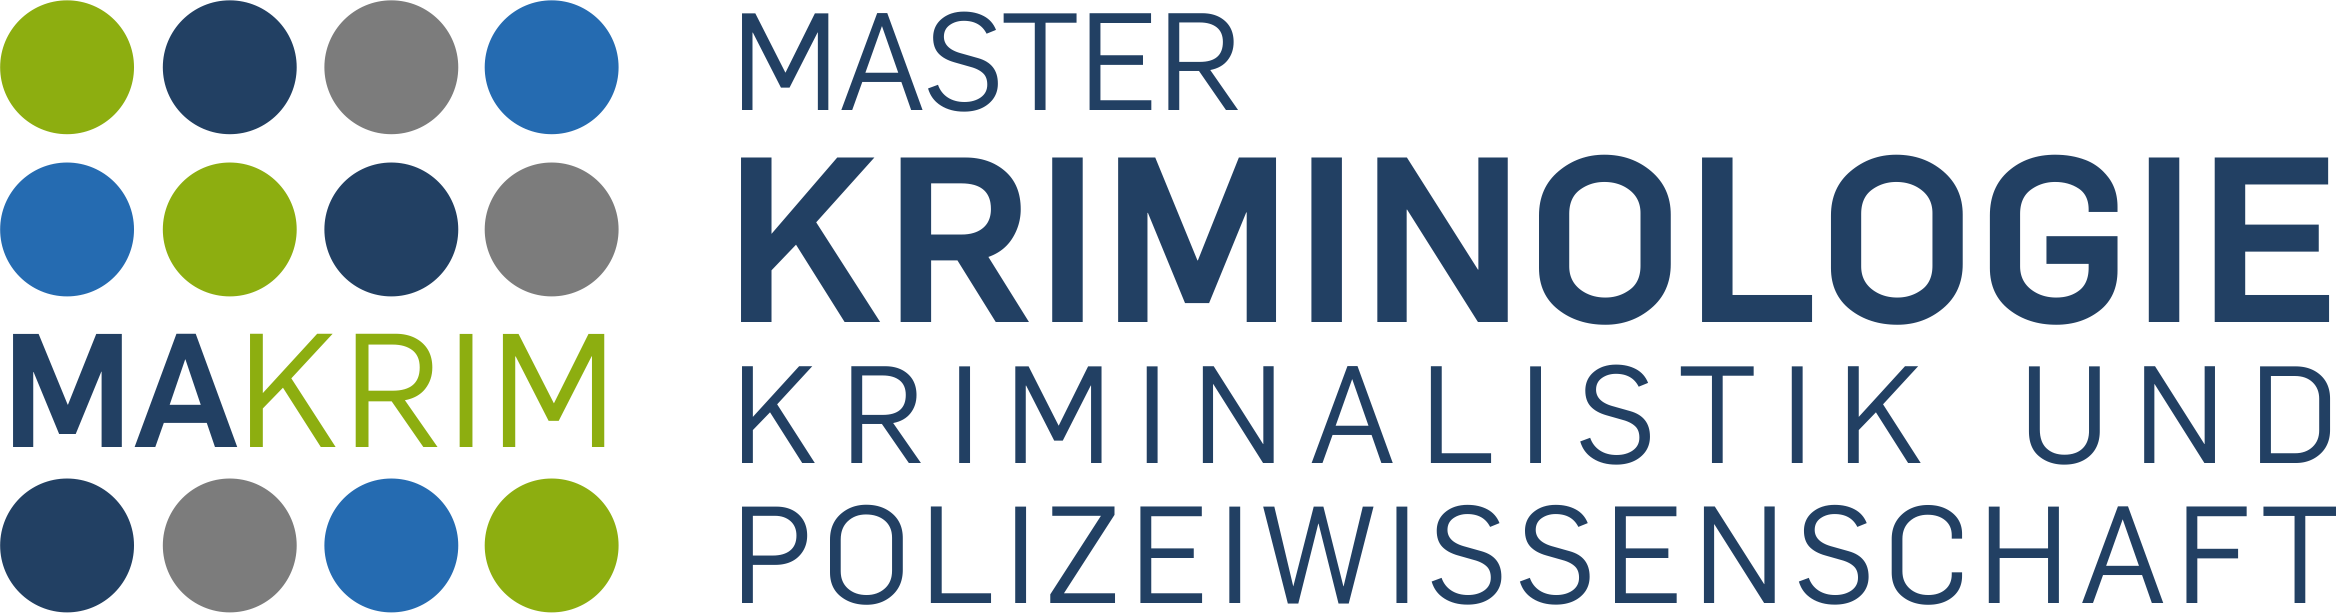 makrim logo